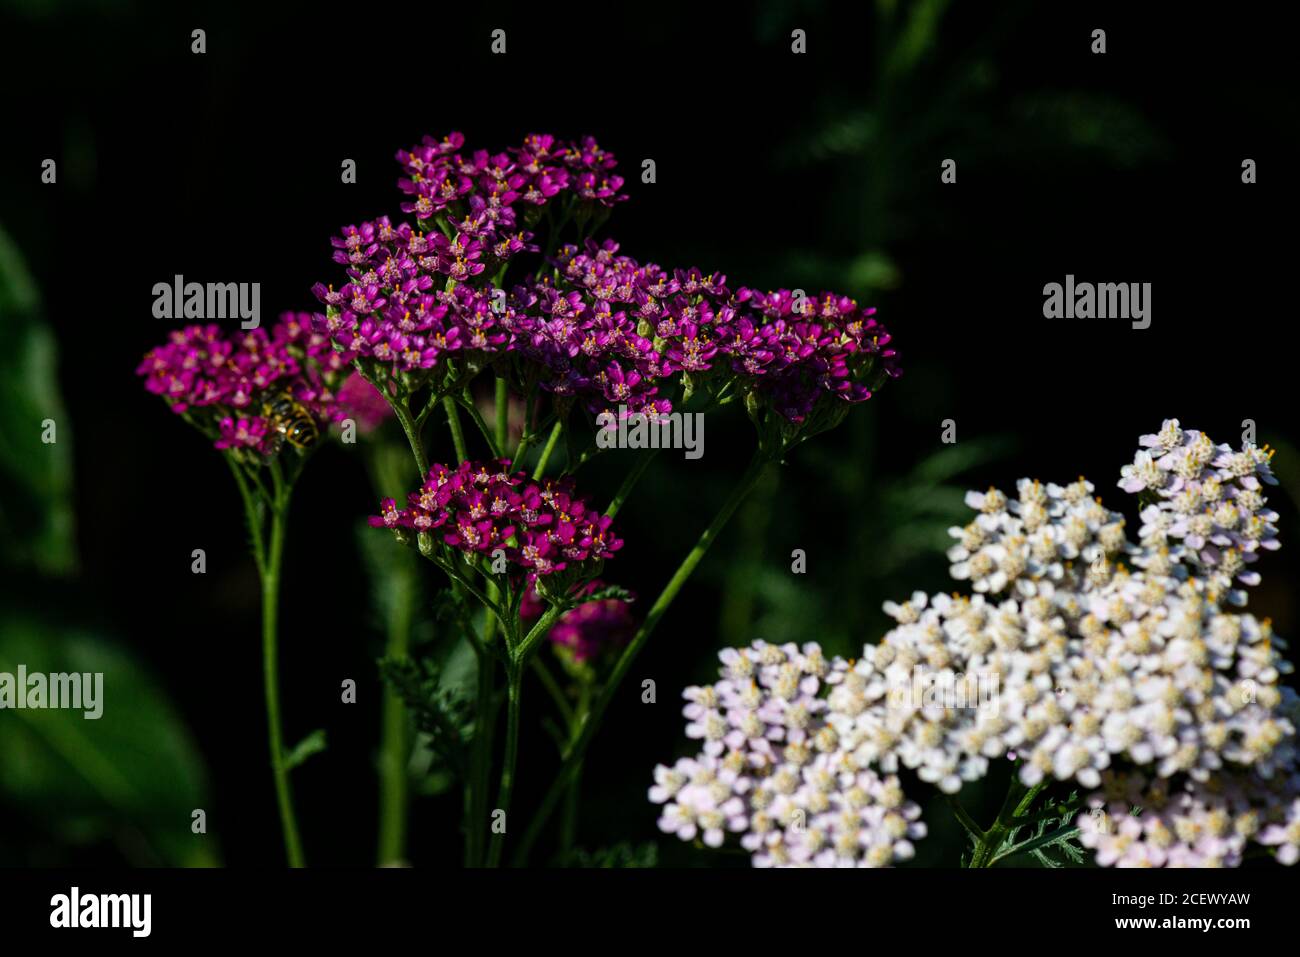 The flowers of a yarrow 'Cerise Queen' (Achillea millefolium 'Cerise Queen') Stock Photo